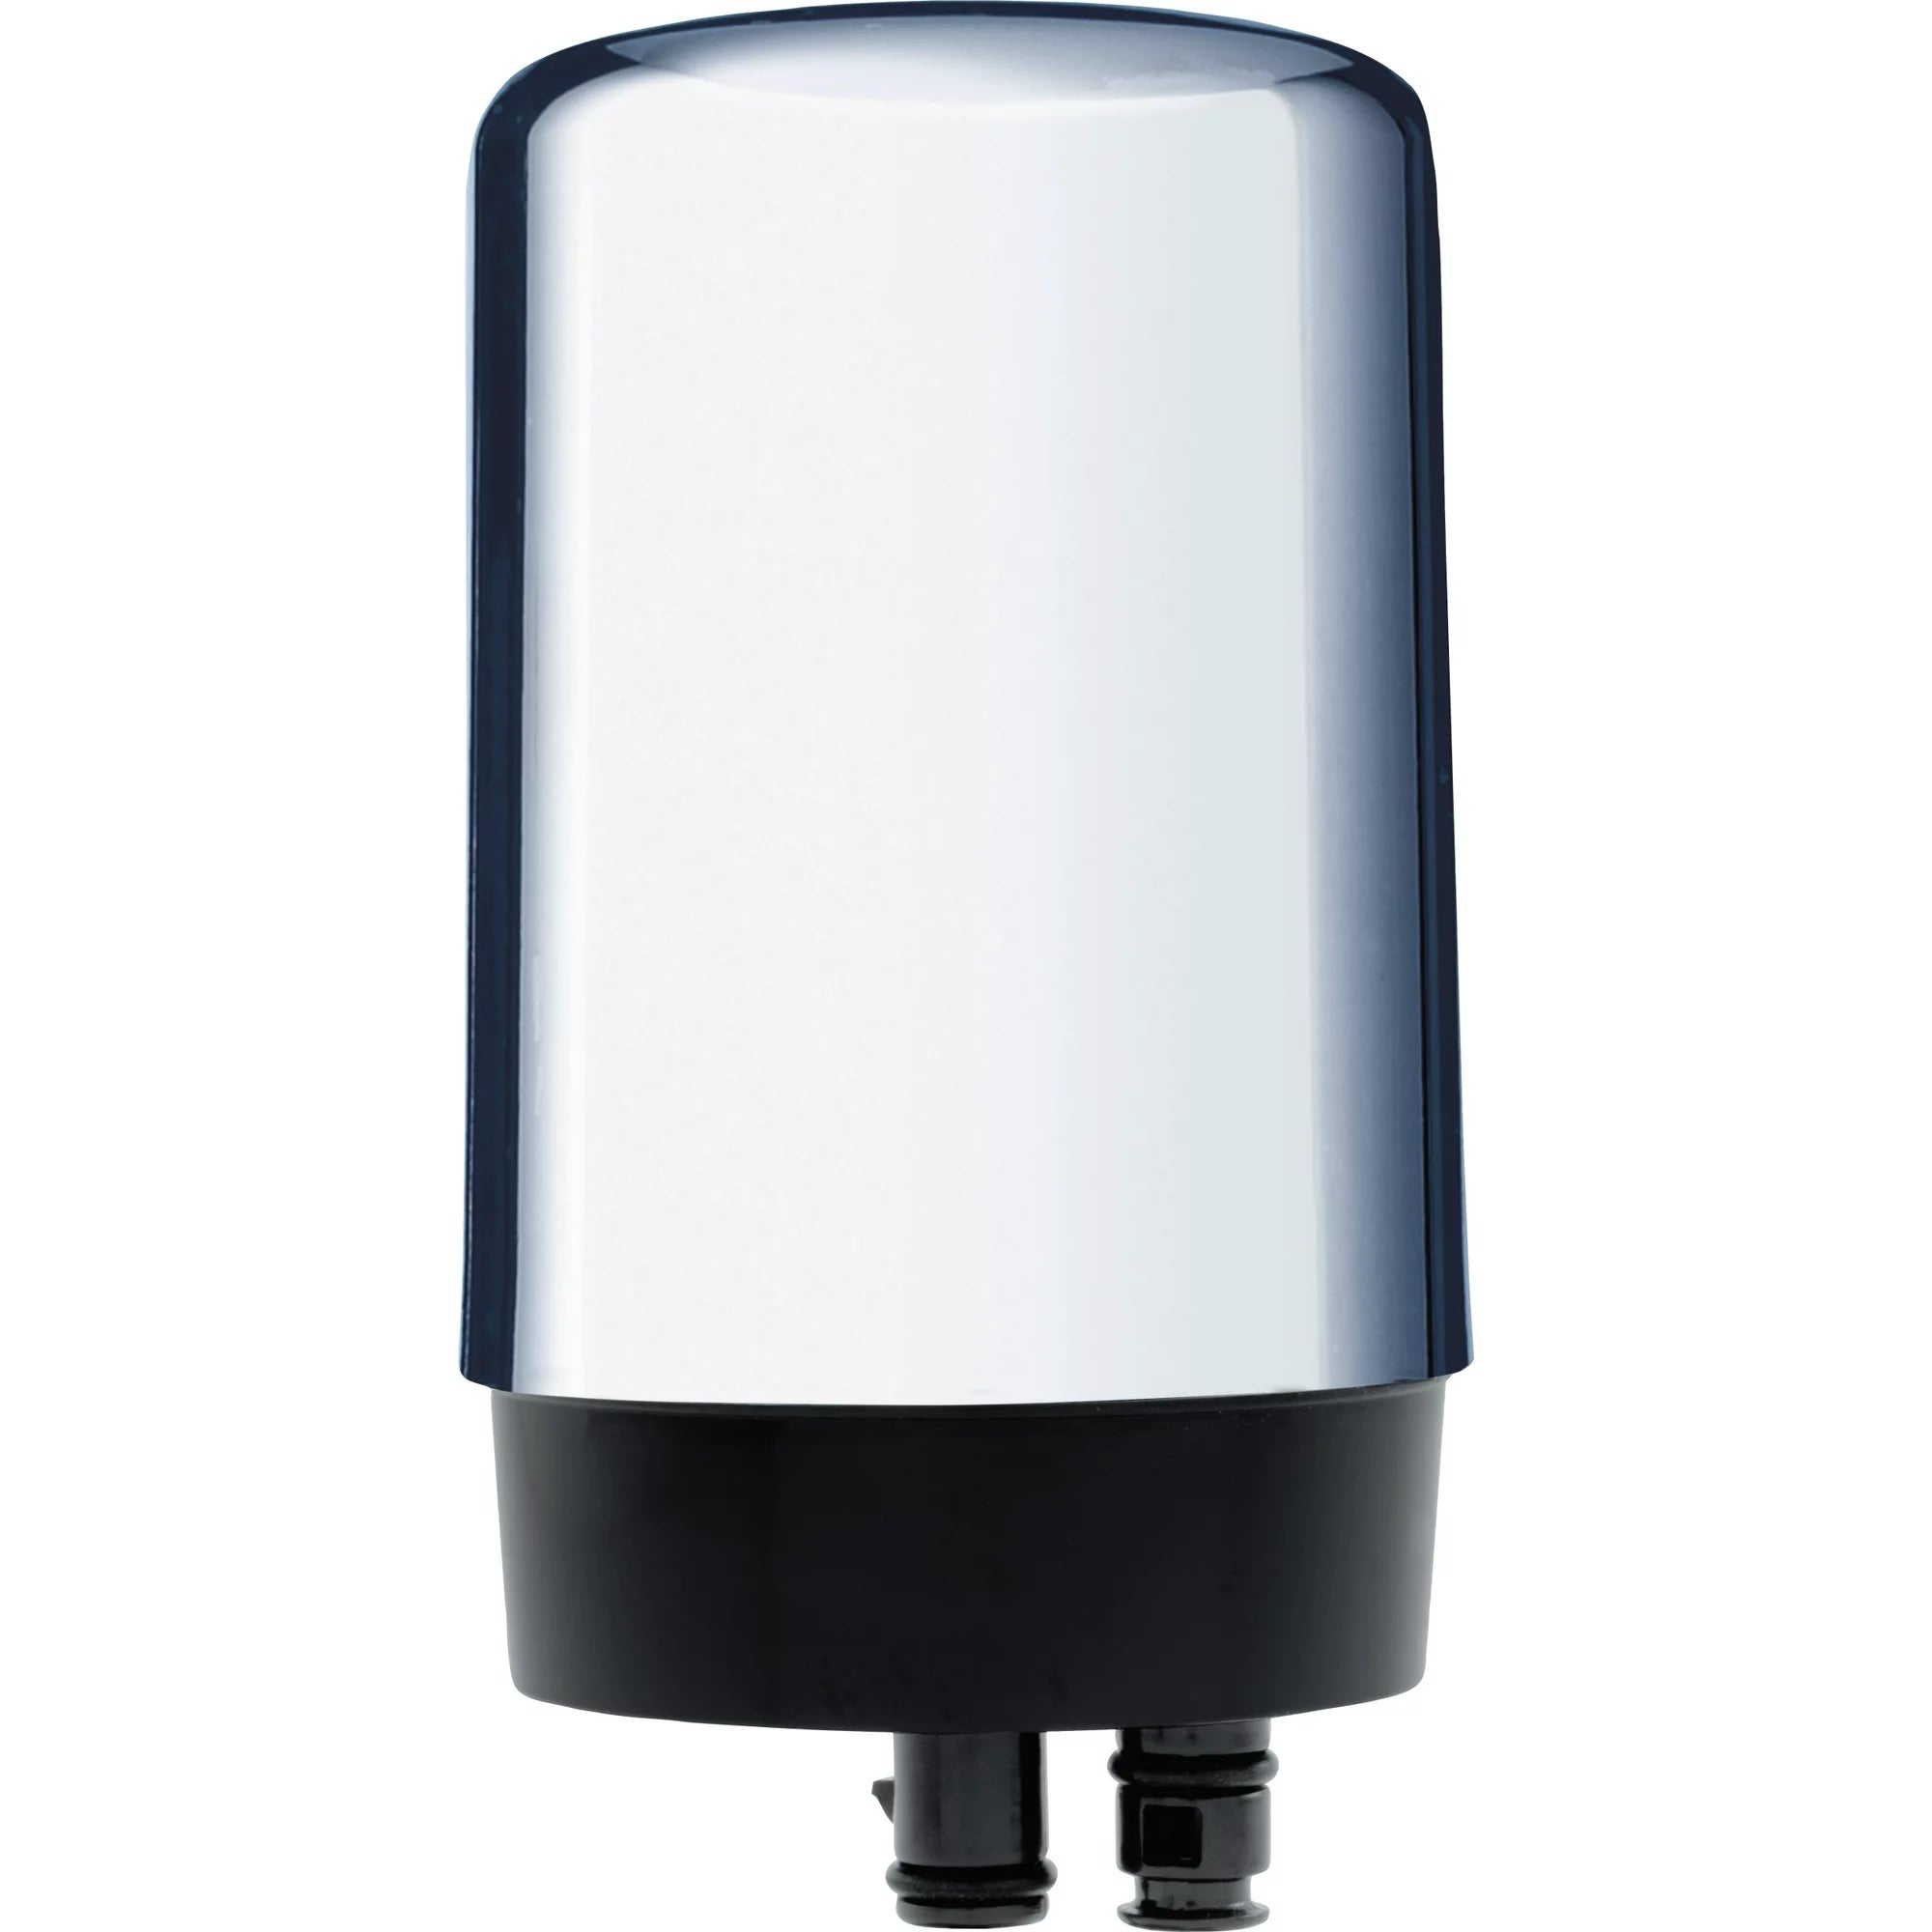 Brita Tap Water Faucet Filter Replacement, 1 Count - Chrome